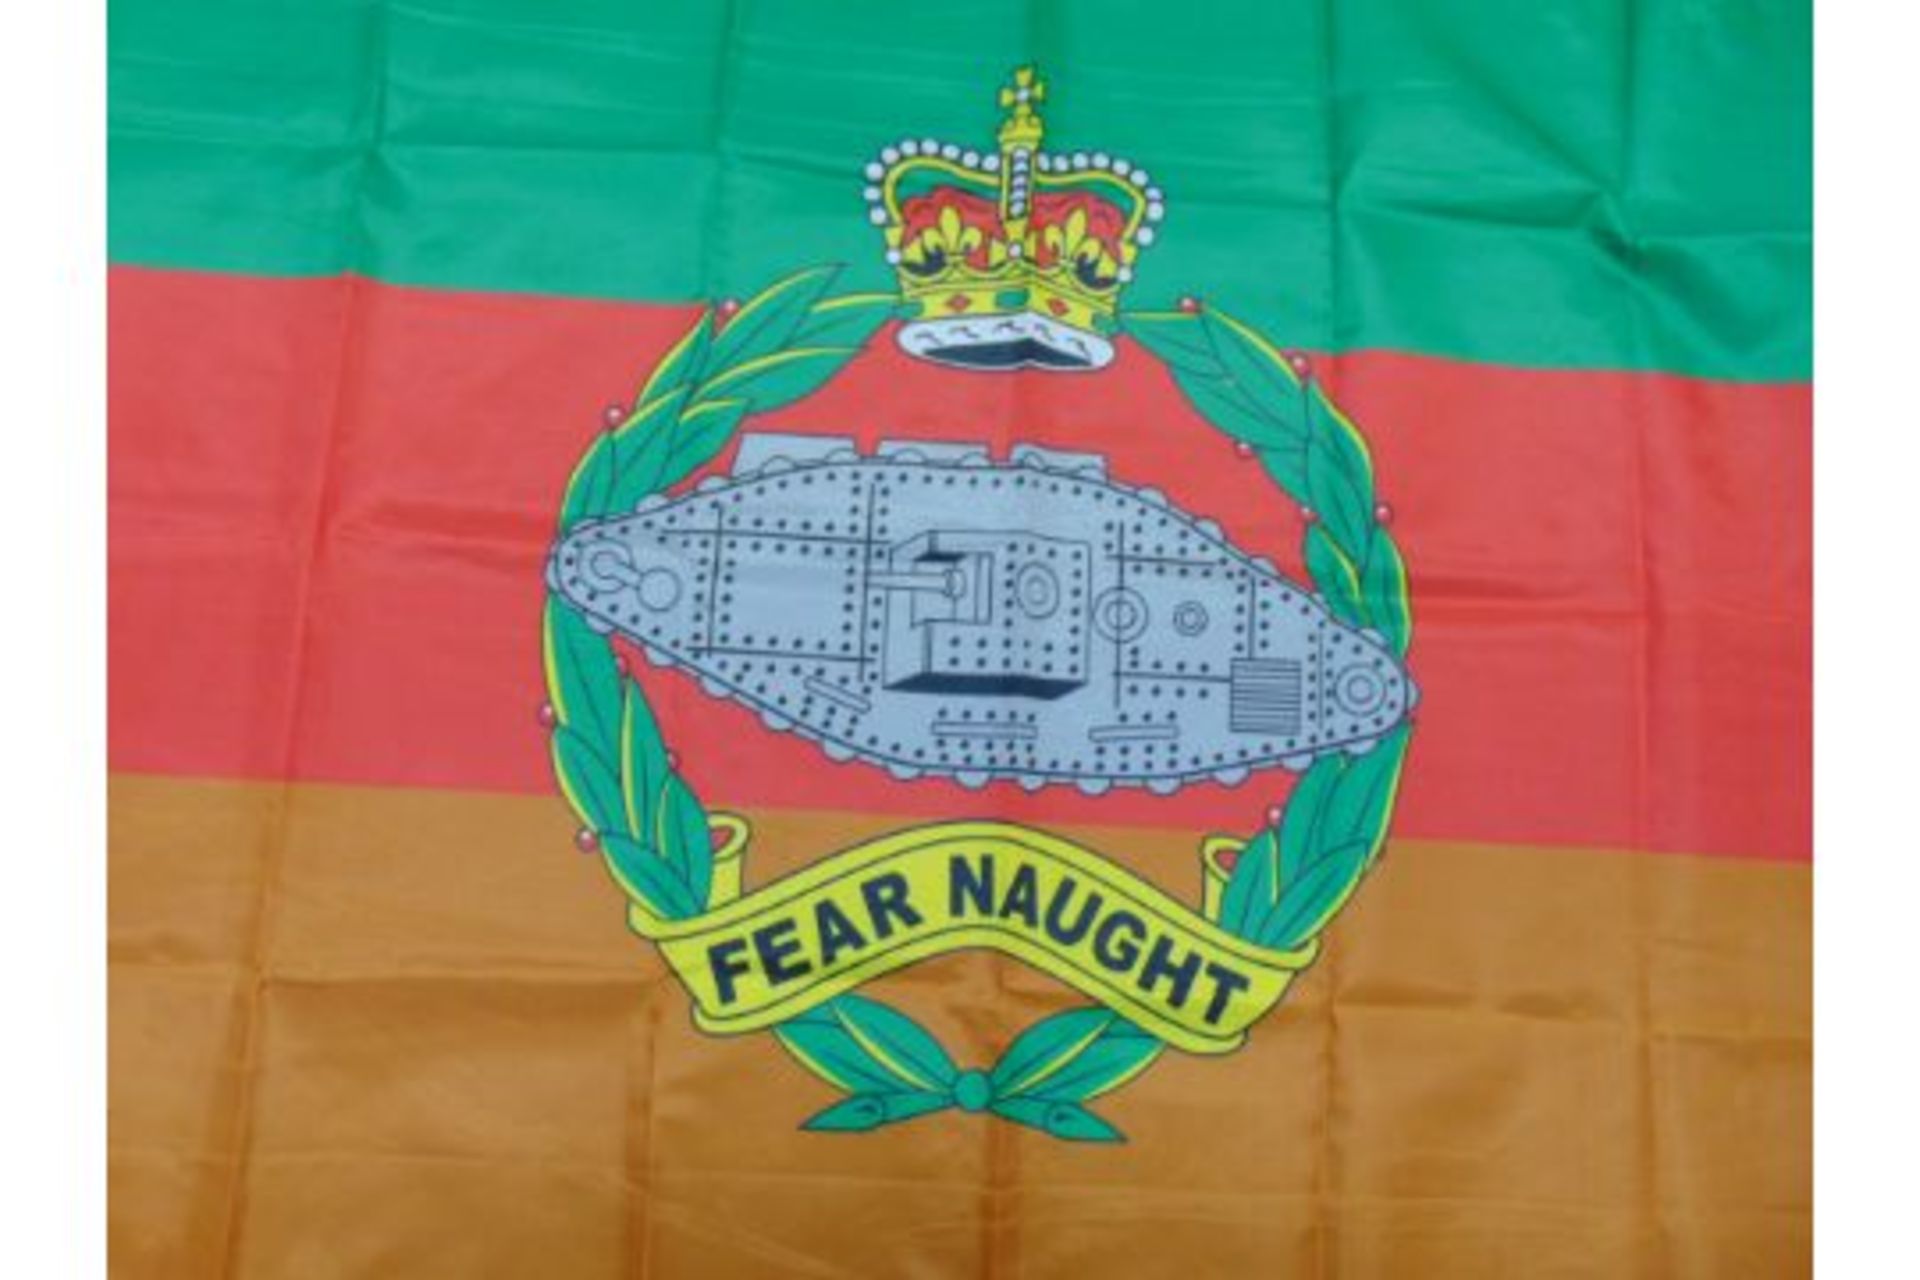 Royal Tank Regiment Flag - 5ft x 3ft with Metal Eyelets. - Image 2 of 4